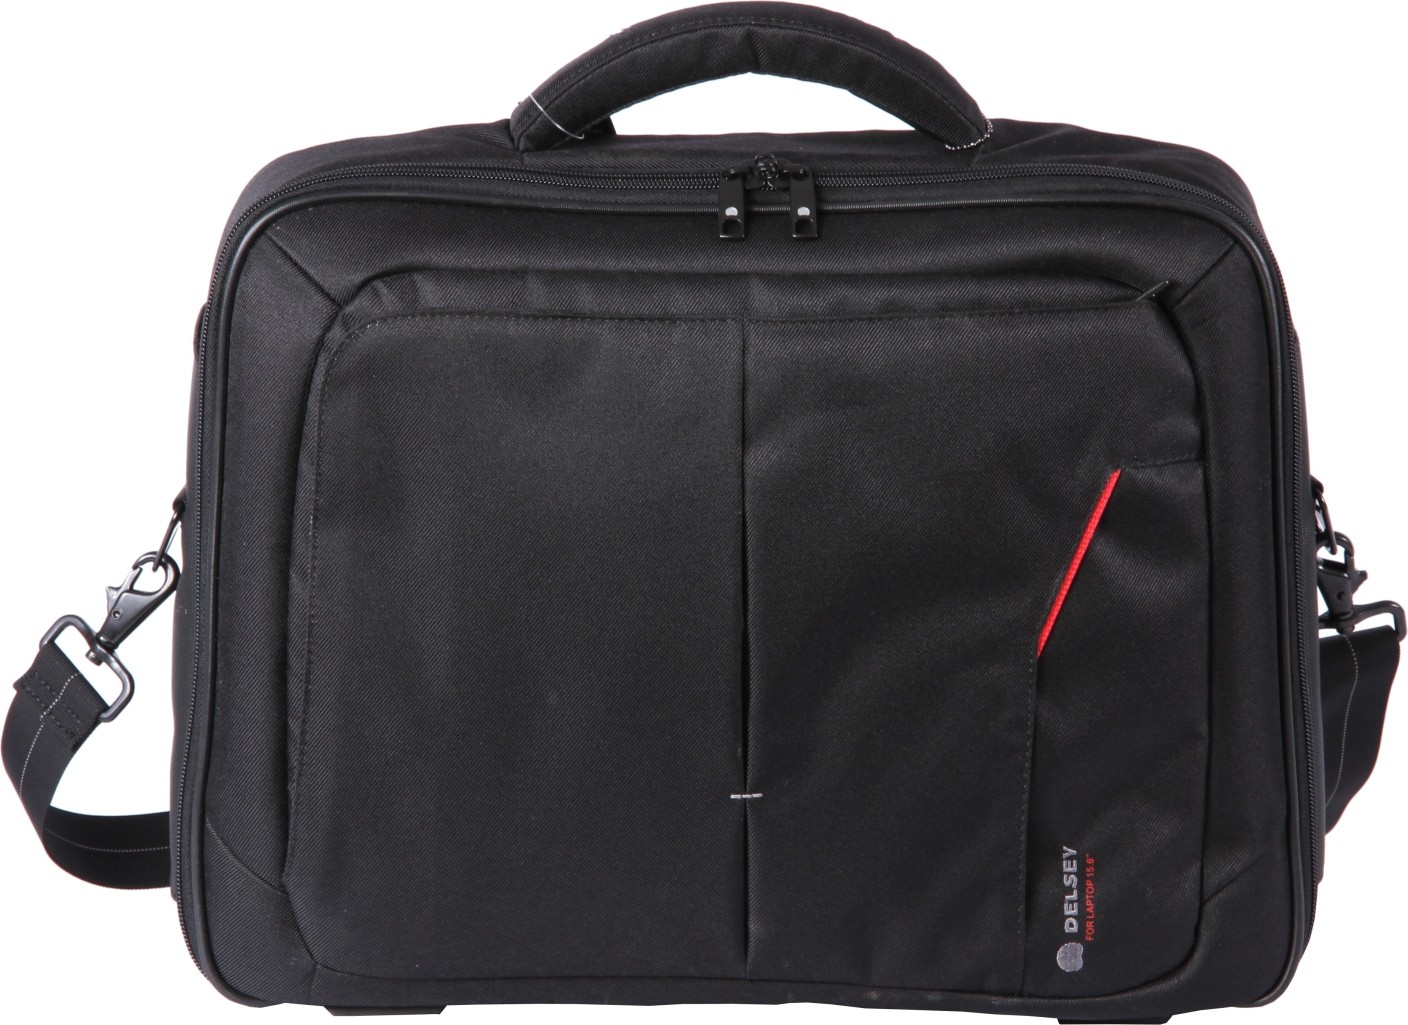 Delsey Laptop Messenger Bag Black - Price in India | Flipkart.com